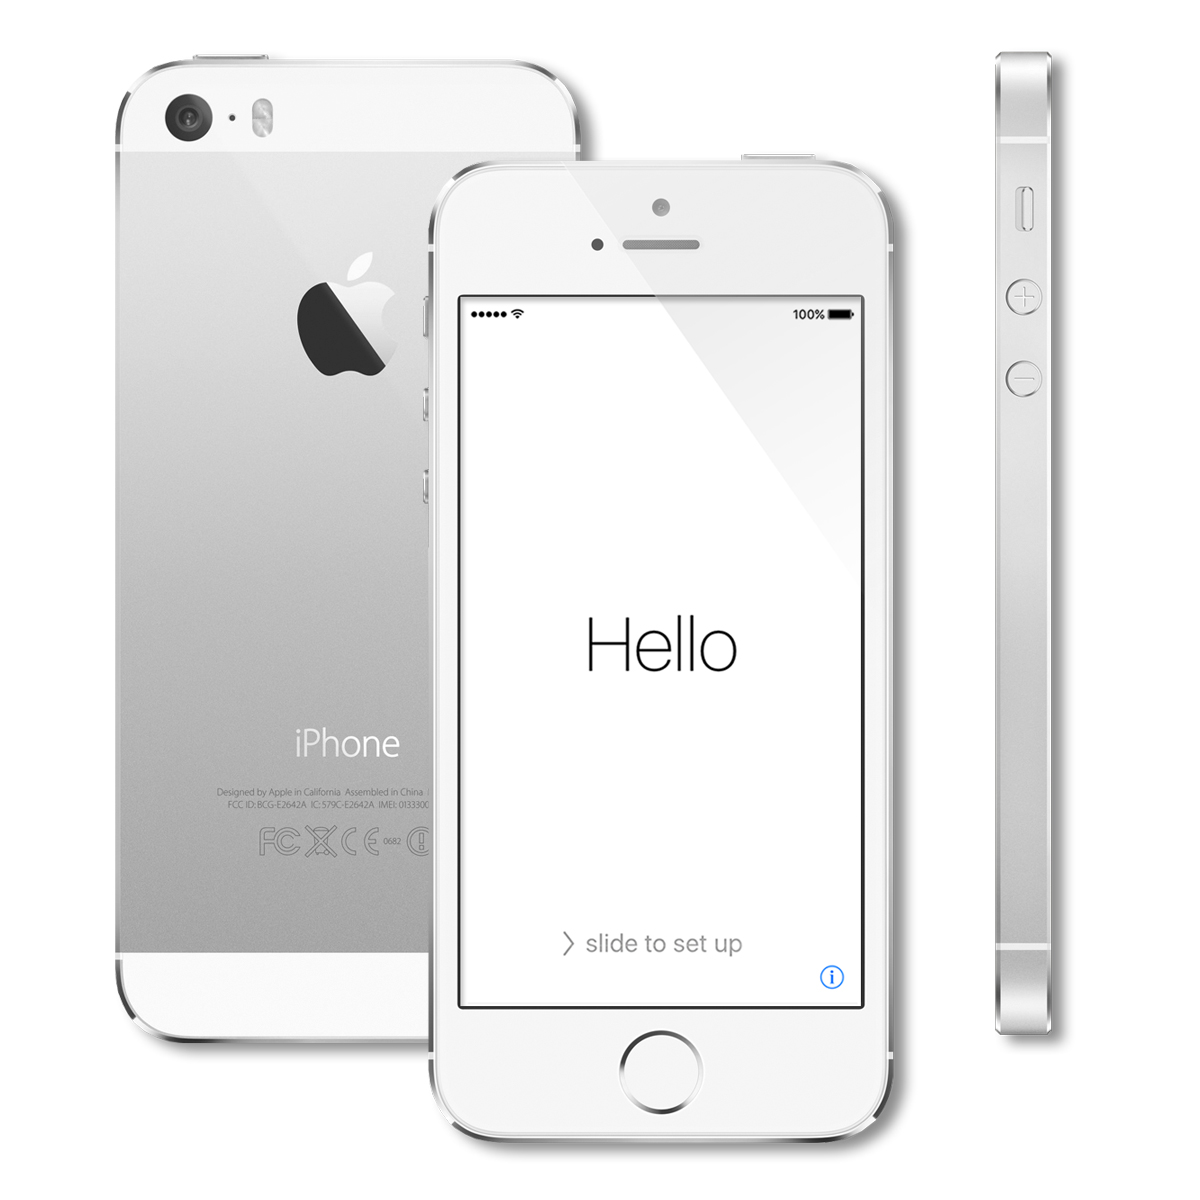 Karakteriseren Gastheer van ethisch Apple iPhone 5s 16GB 4" simlockvrij silver white + garantie -  ComputerWinkelNissewaard.nl